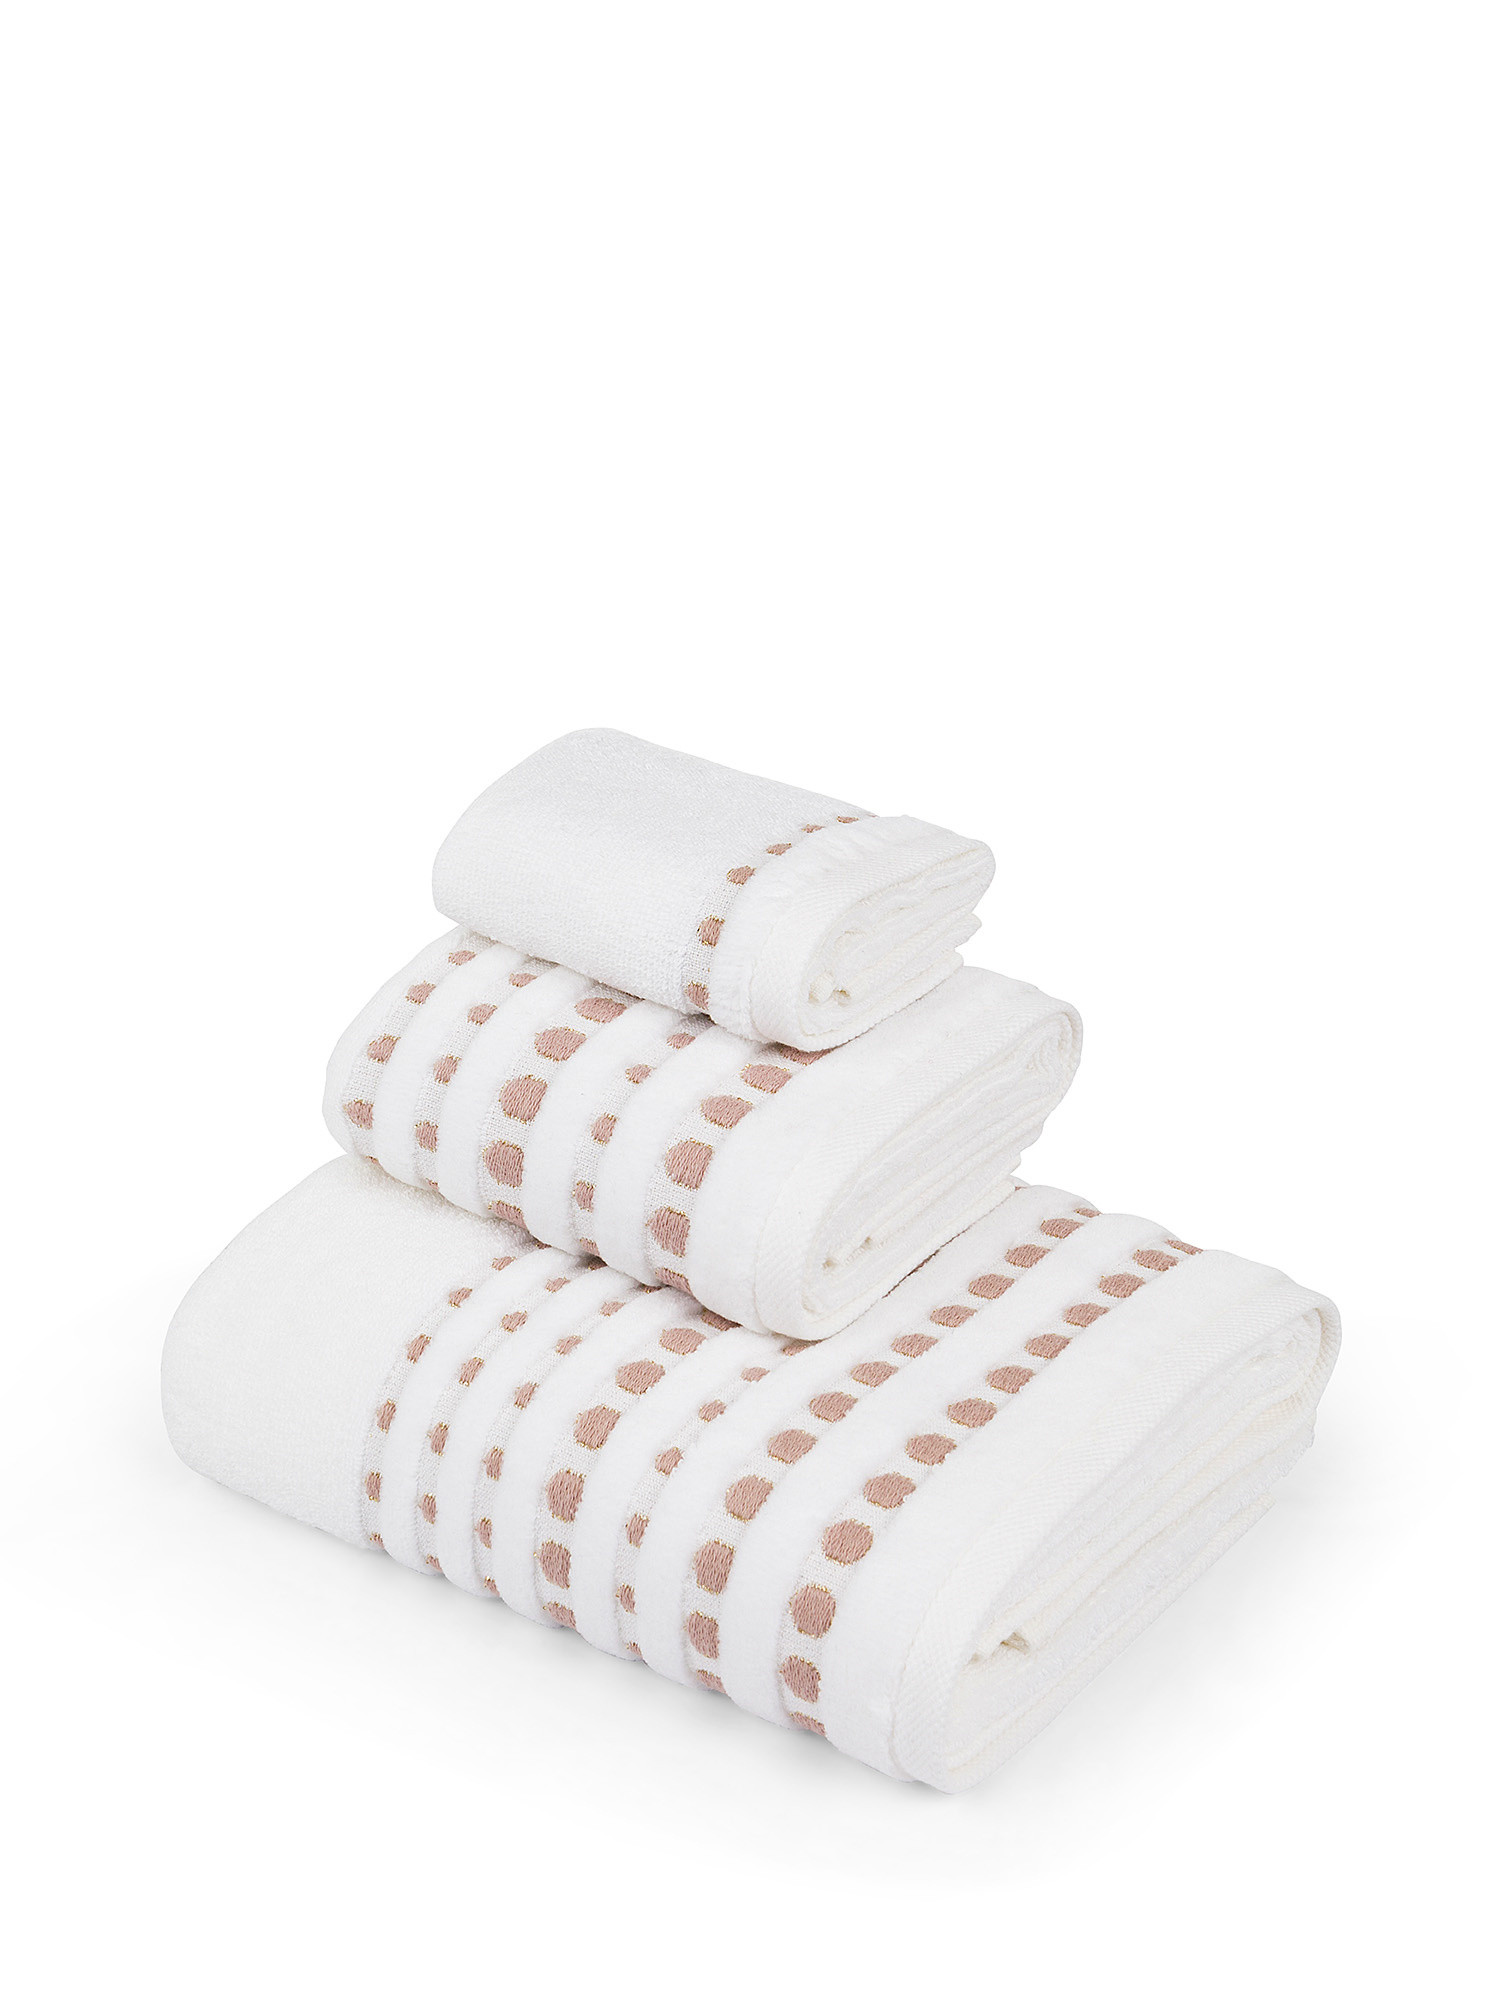 Portofino embroidered border cotton towel, White, large image number 0